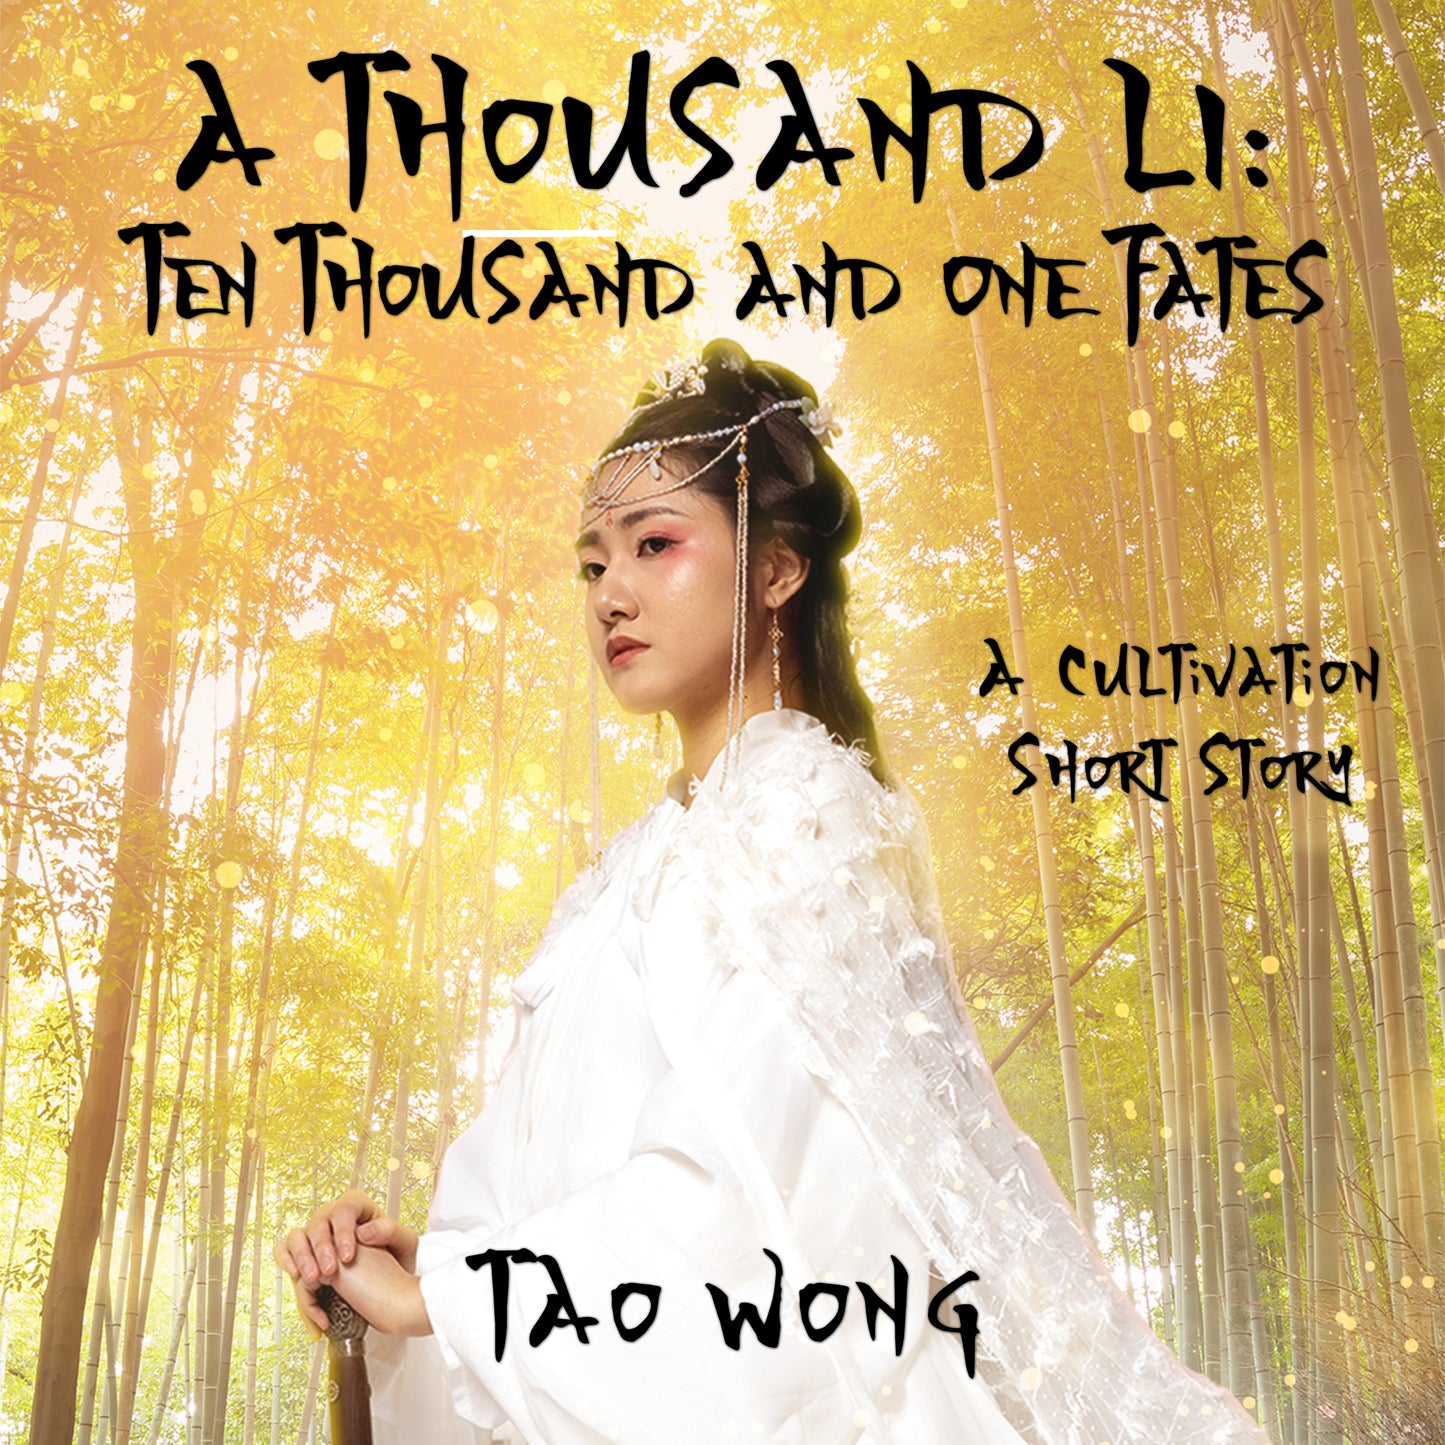 Ten Thousand and One Fates (An A Thousand Li Short Story)